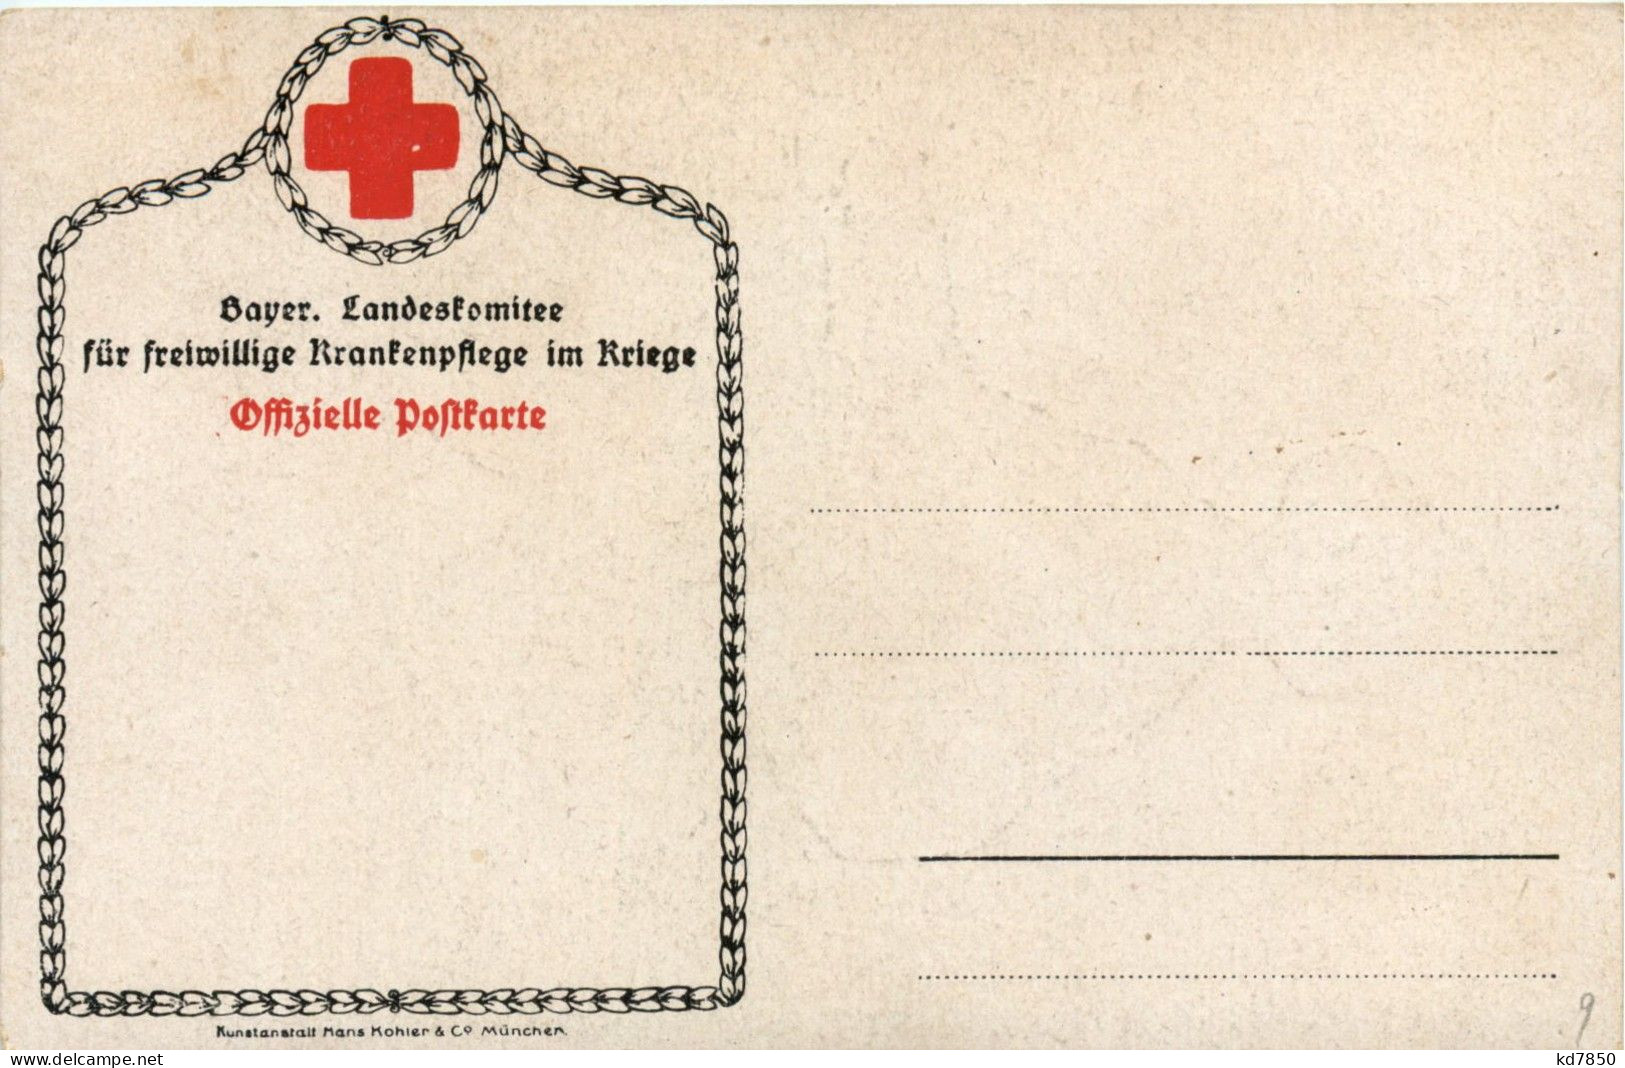 Jung Deutschland - Red Cross